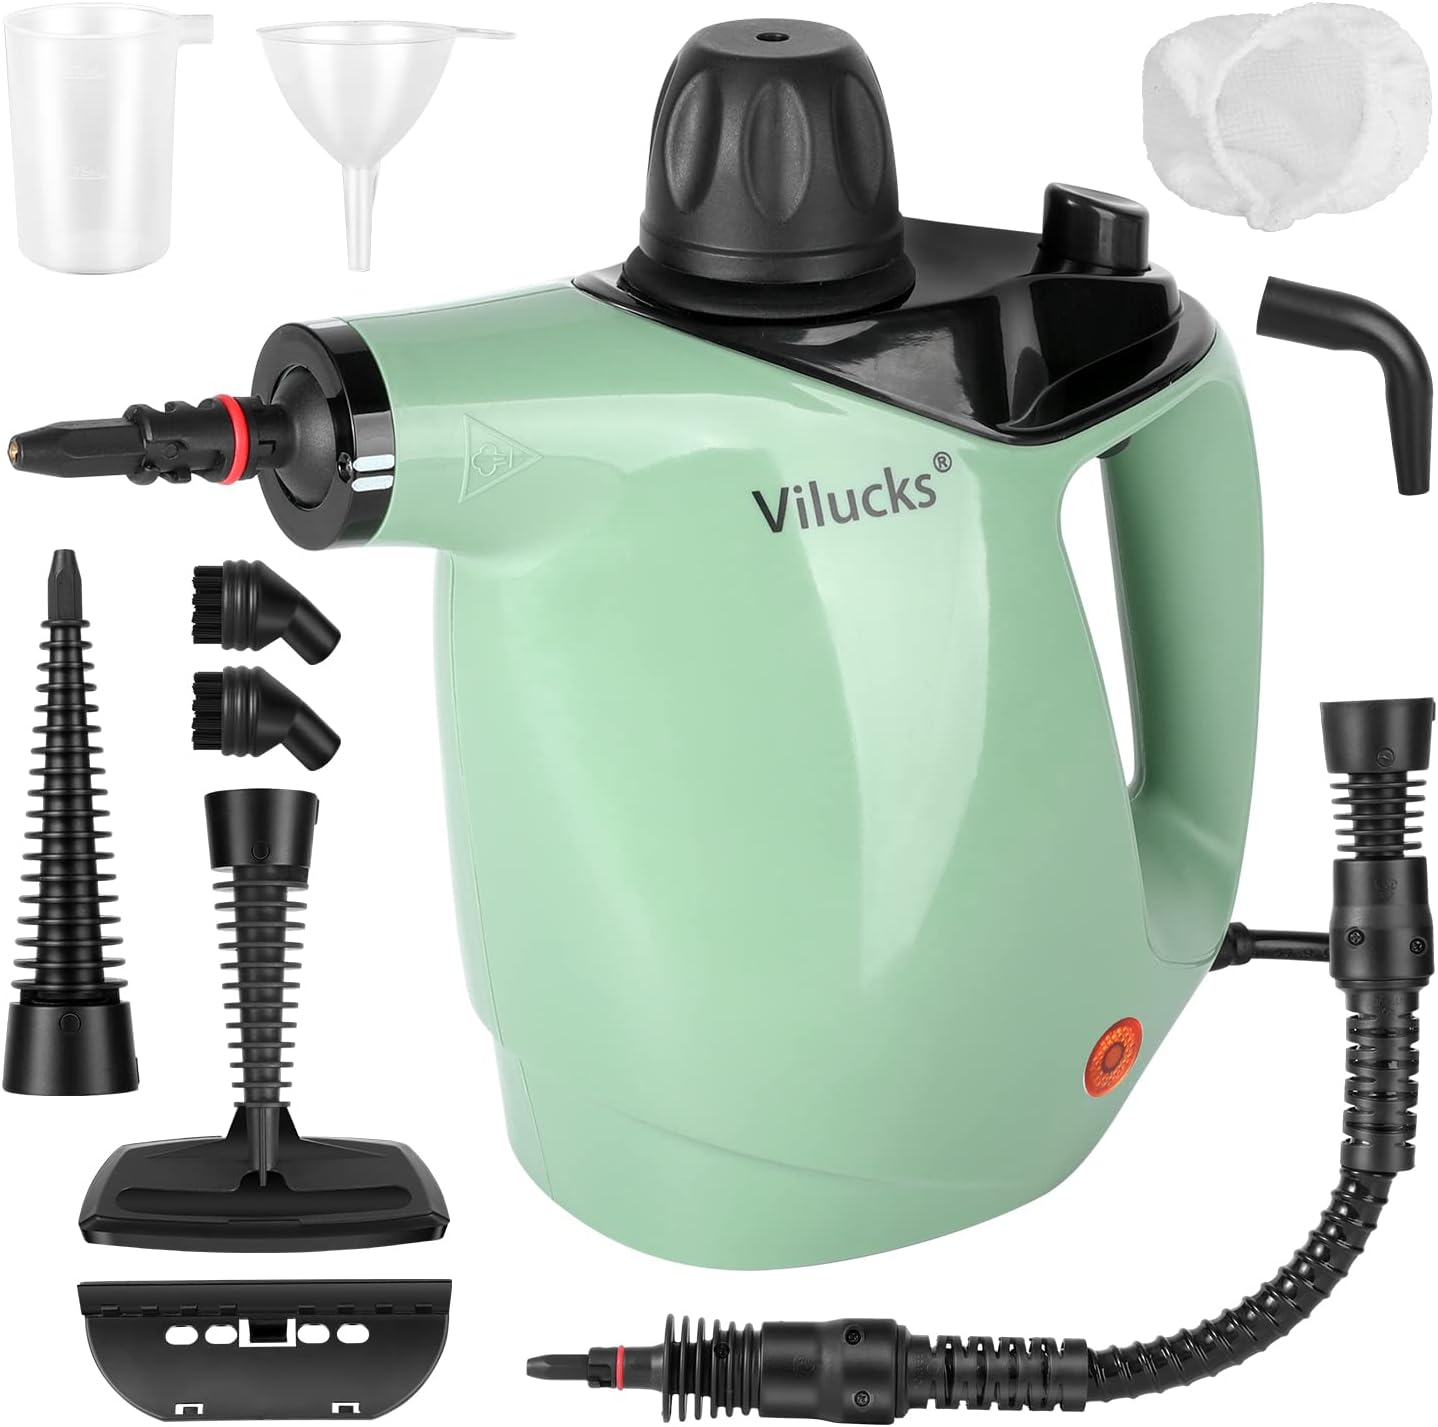 Vilucks Handheld Steam Cleaner, Steamer for Cleaning, [...]